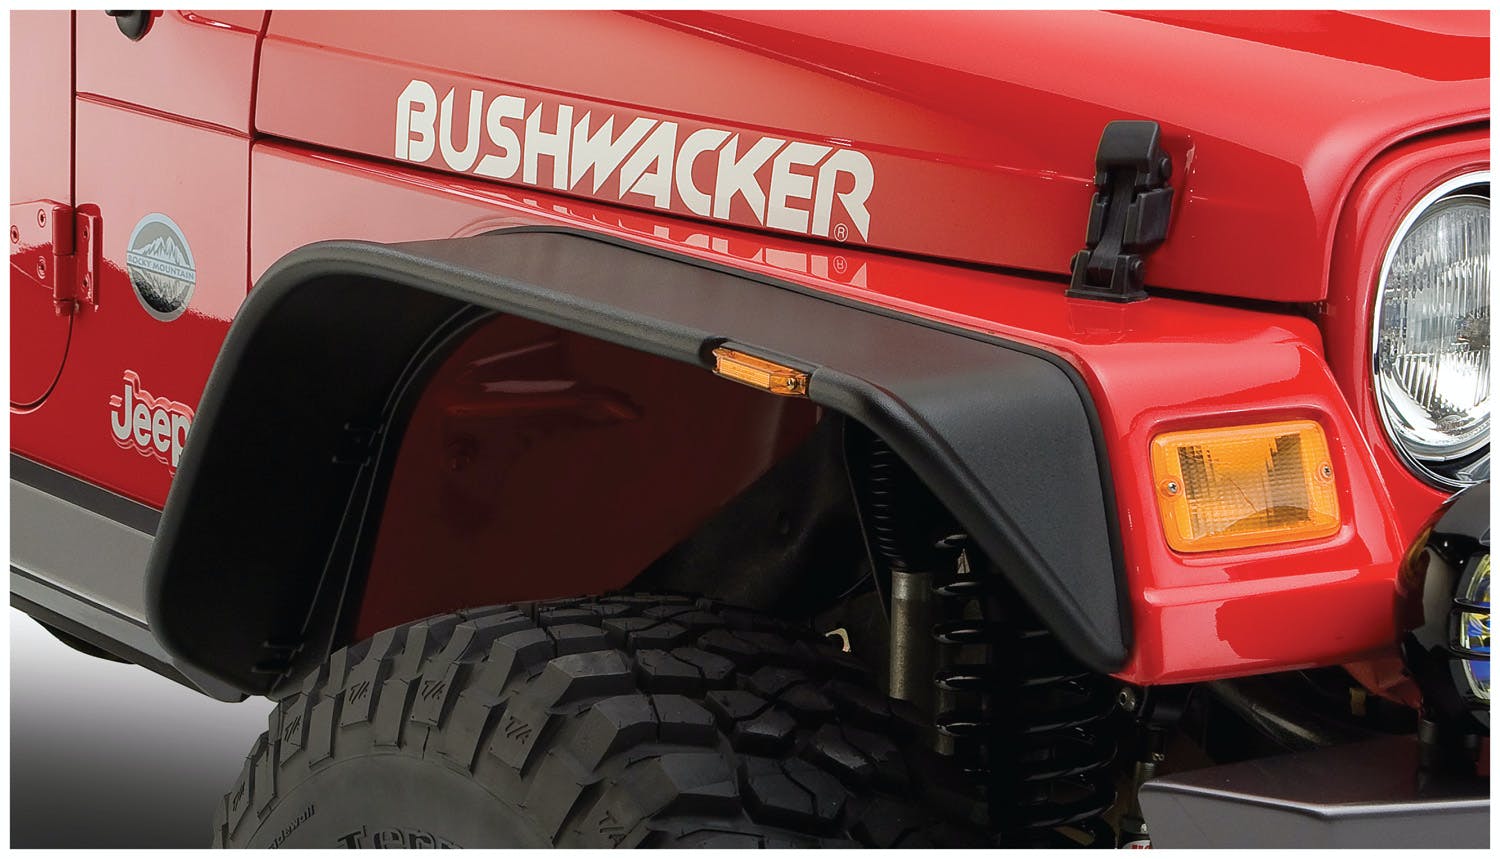 Bushwacker 10055-07 Flat Style Jeep Fender Flares, 2pc